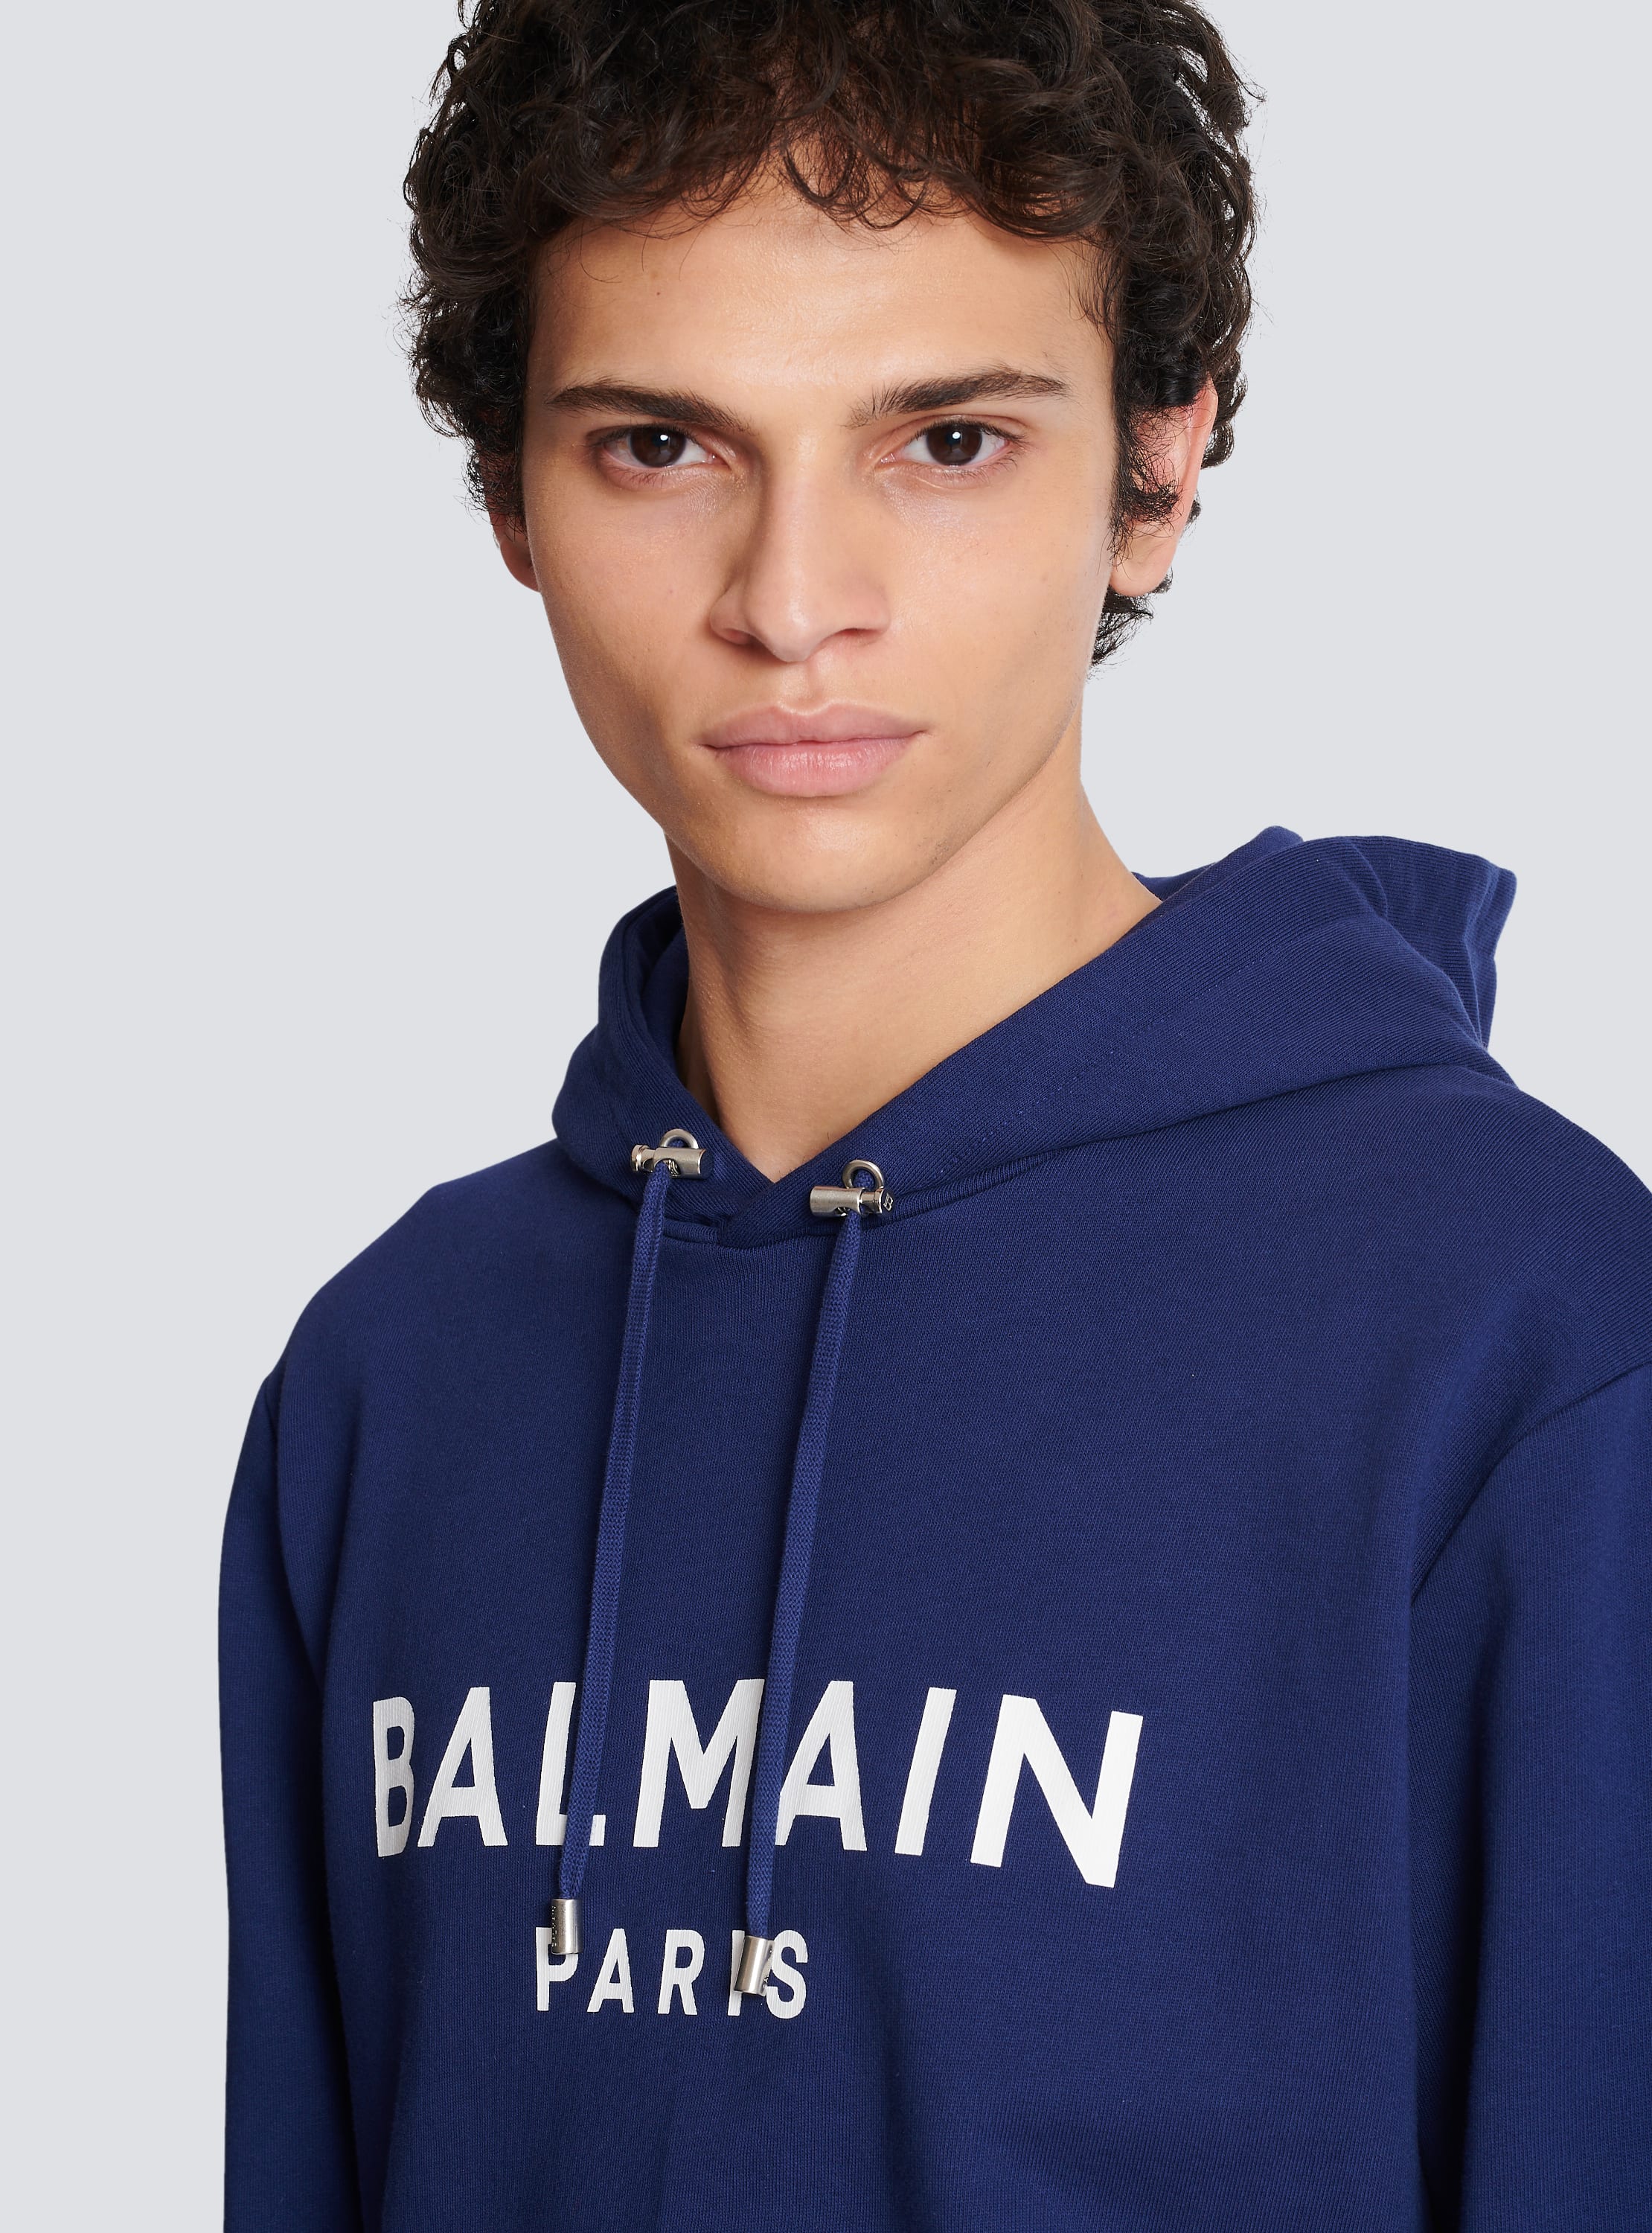 Balmain Paris hooded sweatshirt - Men